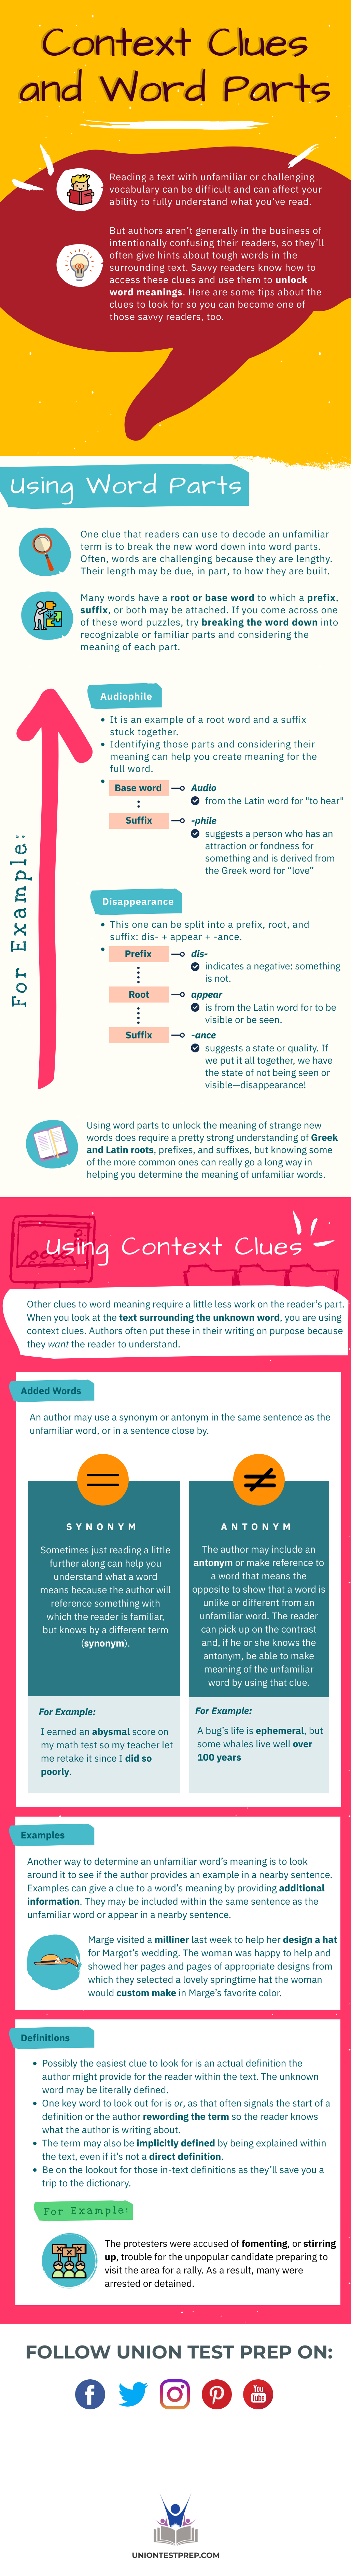 Using Context Clues